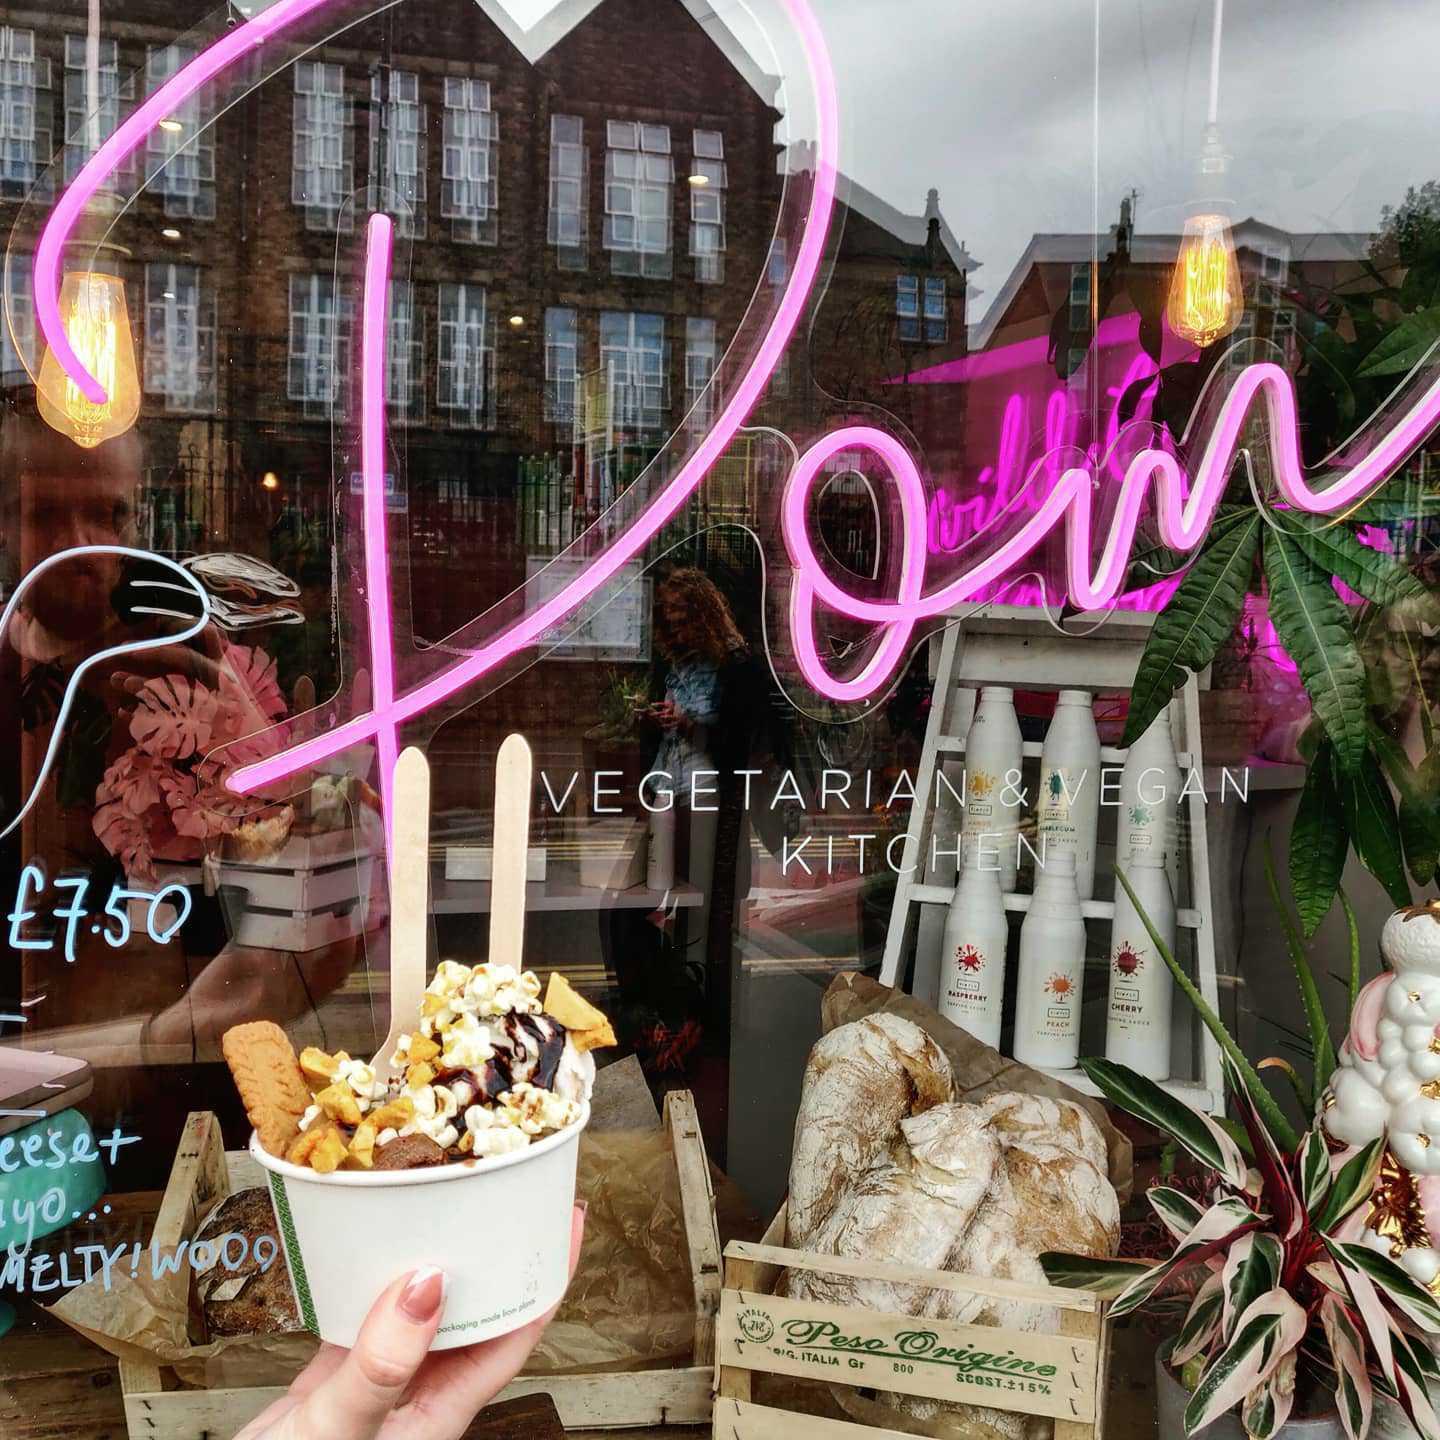 An ice cream sundae outside Pom Kitchen's shop window